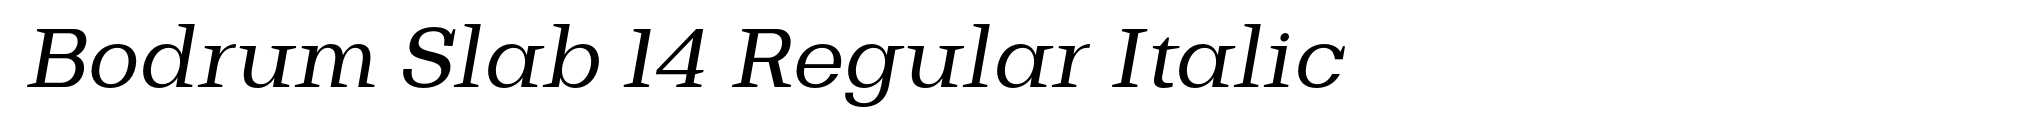 Bodrum Slab 14 Regular Italic image